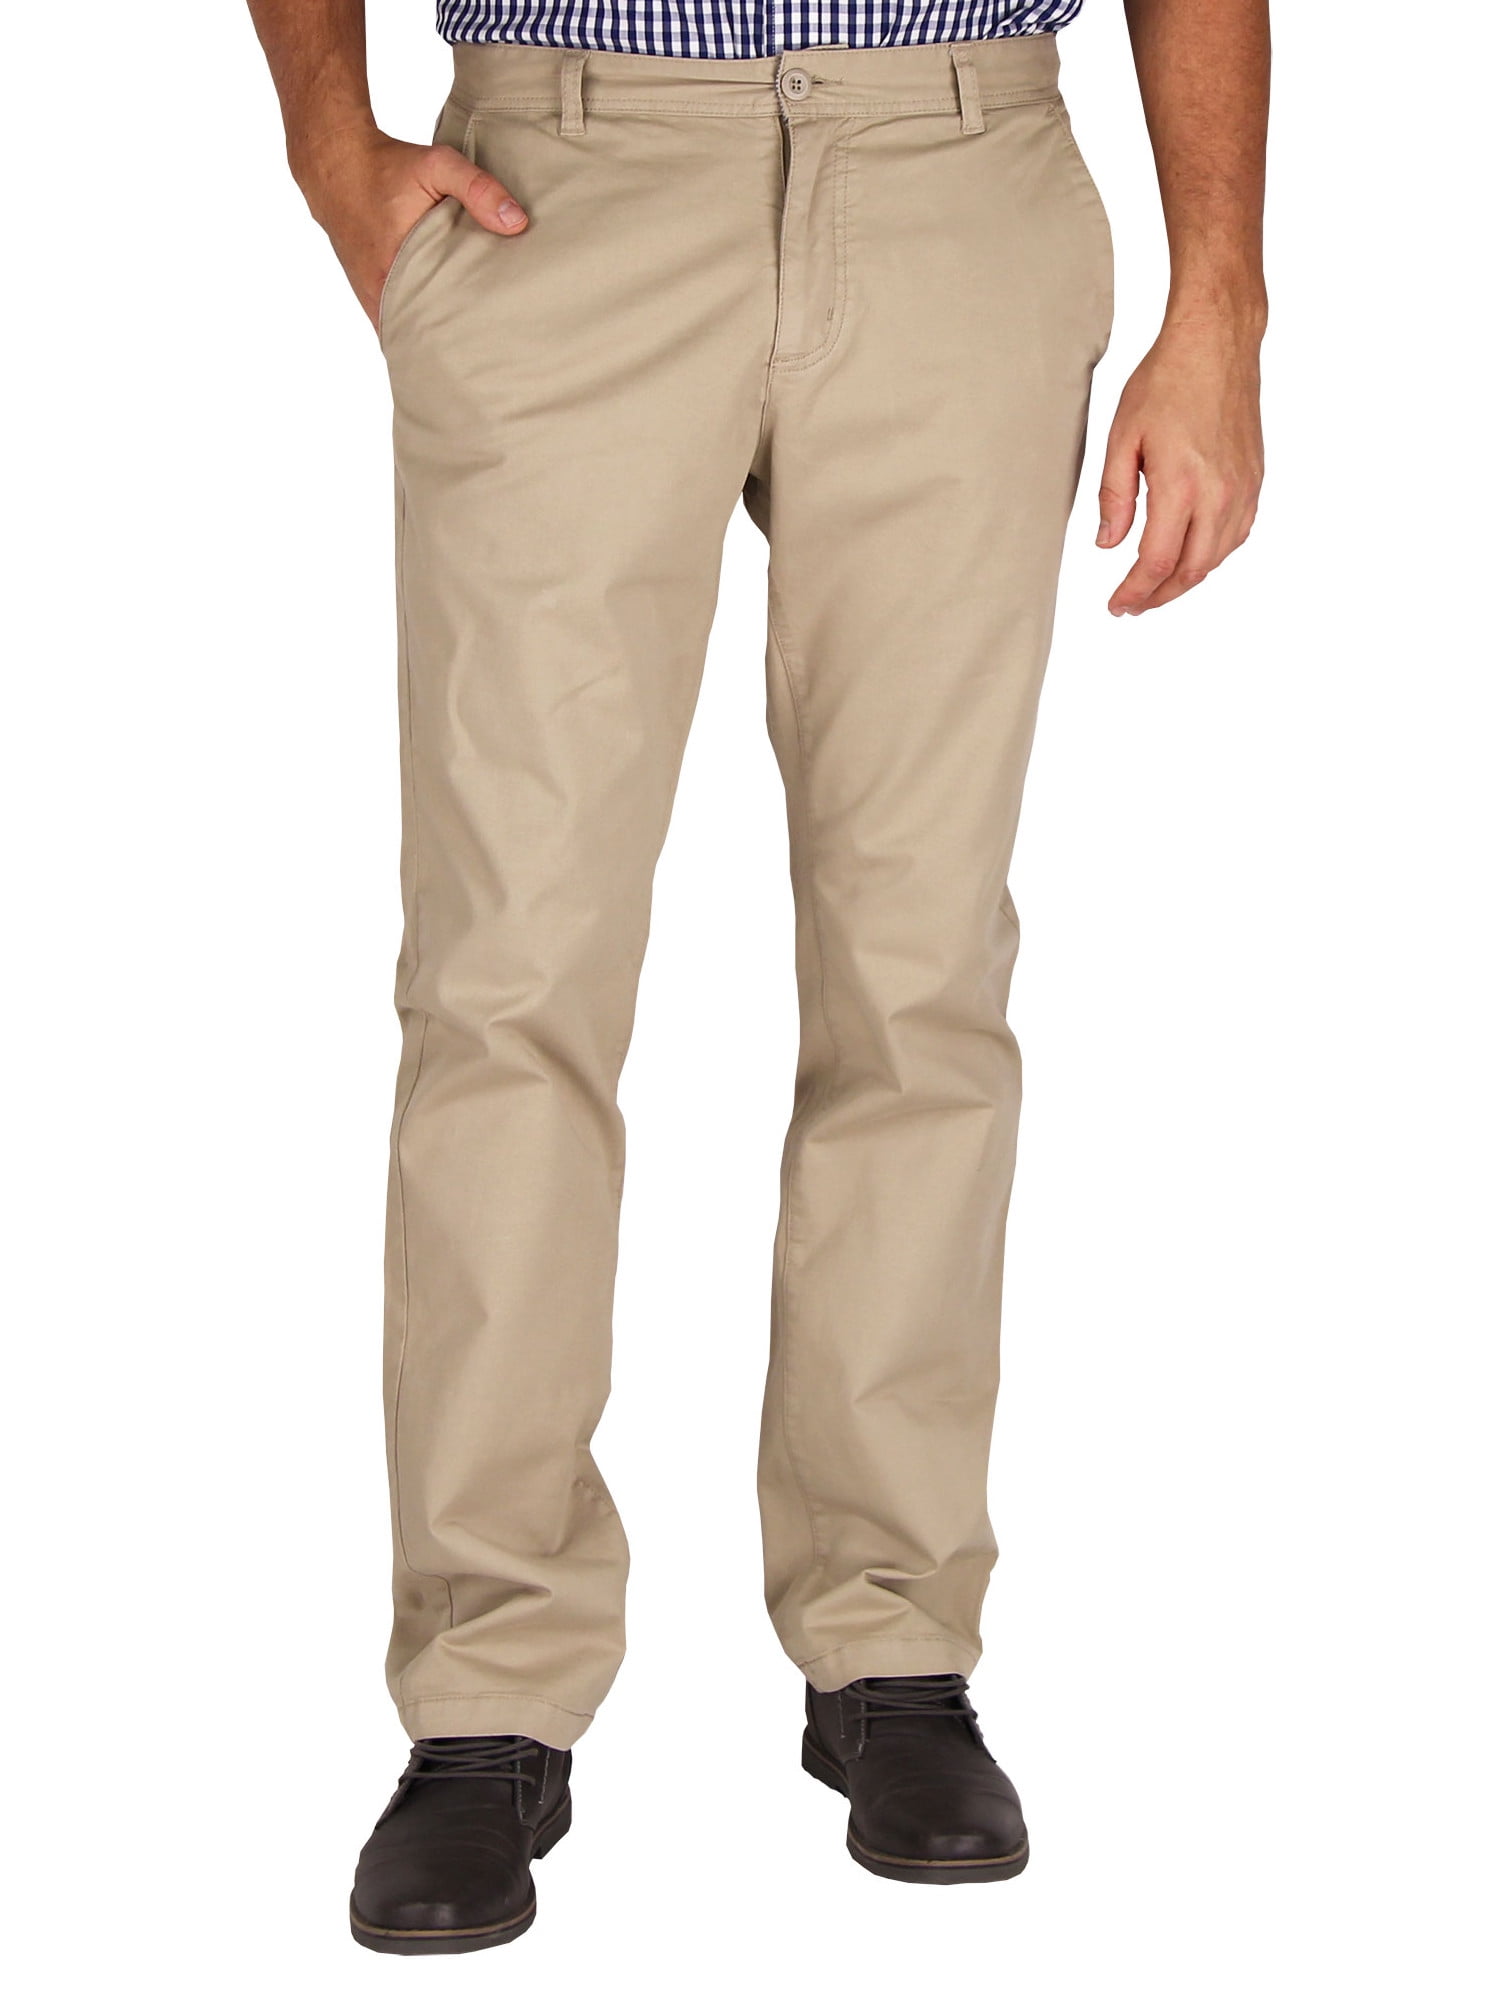 Dockers Men’s Clean Khaki Pants Slim Tapered Fit Grey Chambray Size 38W x 34L 